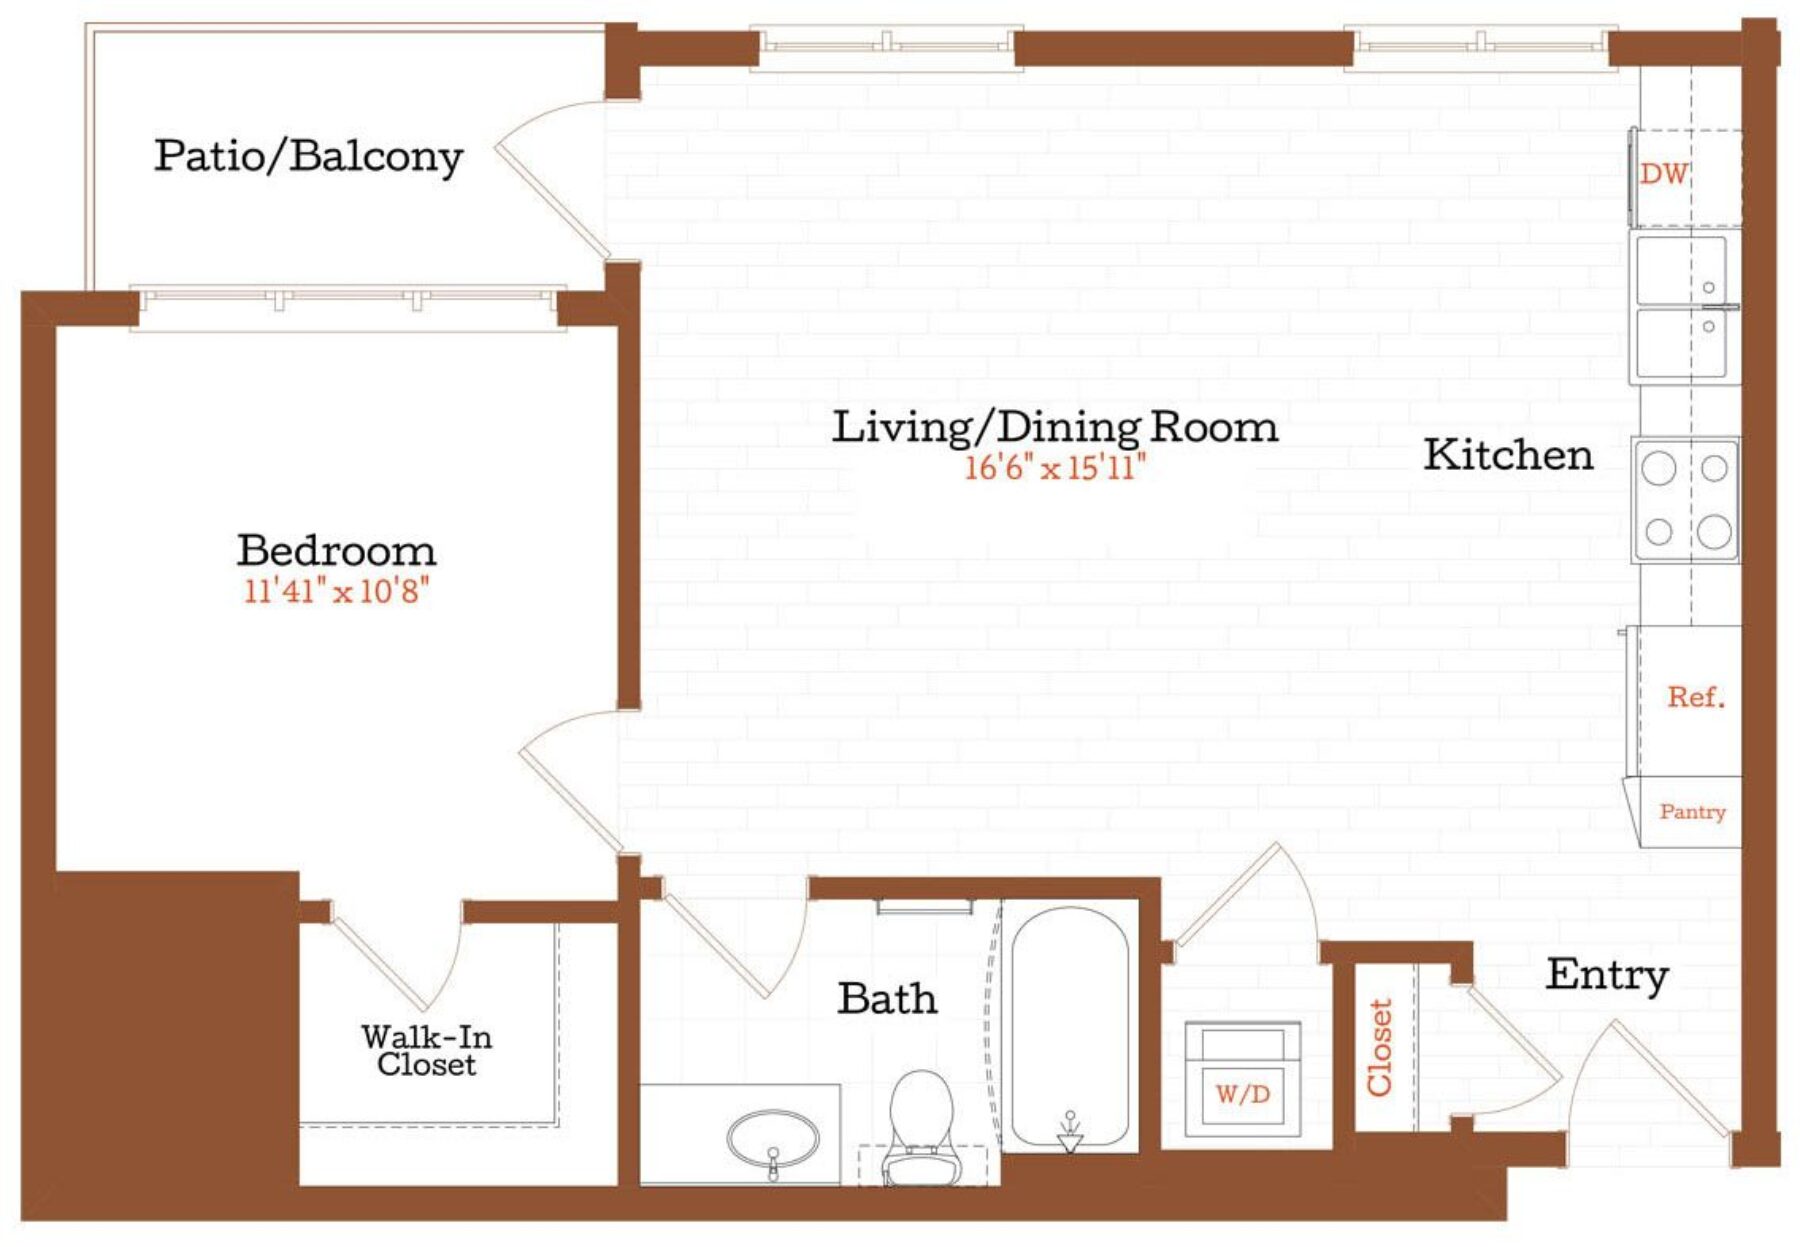 Plan Image: A2 - 1 Bedroom